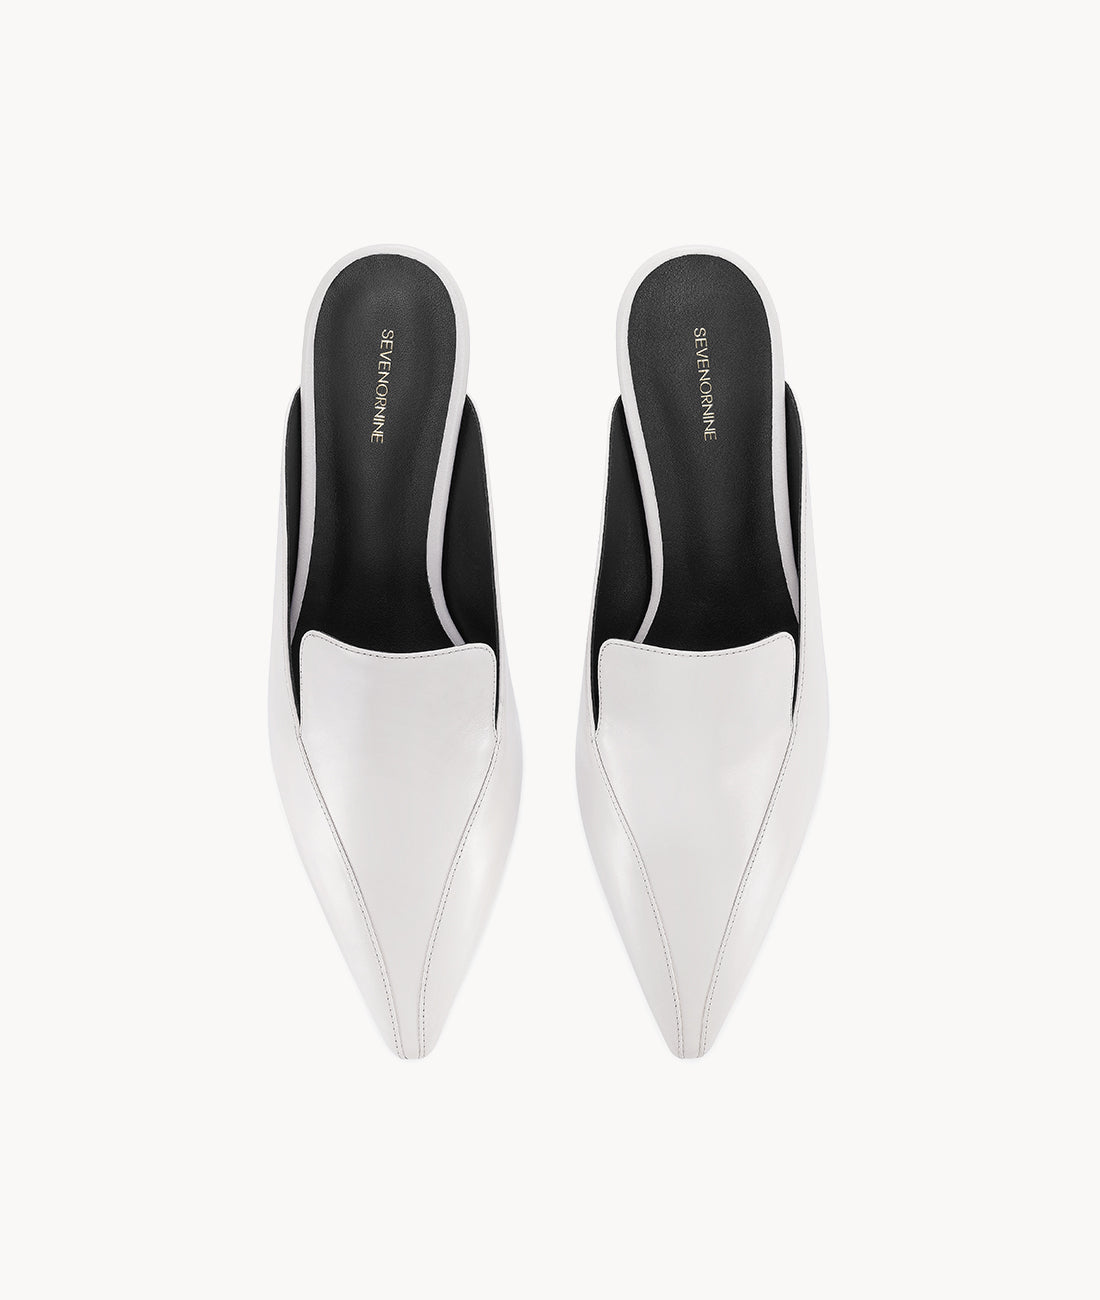 7or9 Black Label Comfort Creamy White Round-toe Calfskin  Leather Mules for Women 35 mm/1.38''  Kitten Heels-Full Moon 4.0